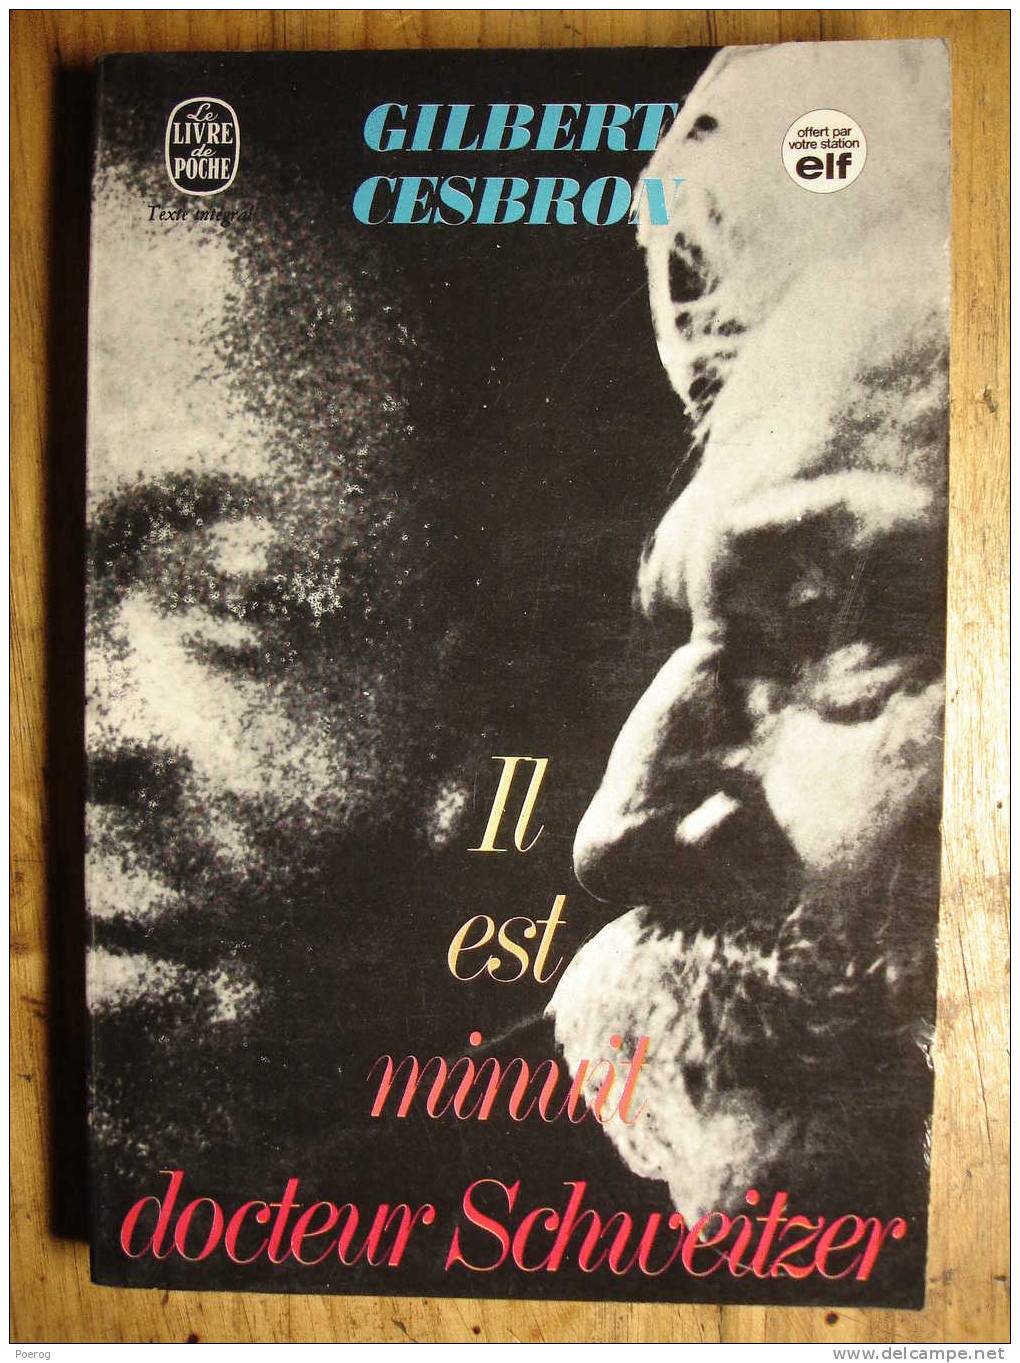 GILBERT CESBRON - IL EST MINUIT DOCTEUR SCHWEITZER - LE LIVRE DE POCHE ELF N°1663 - 1972 - Französische Autoren